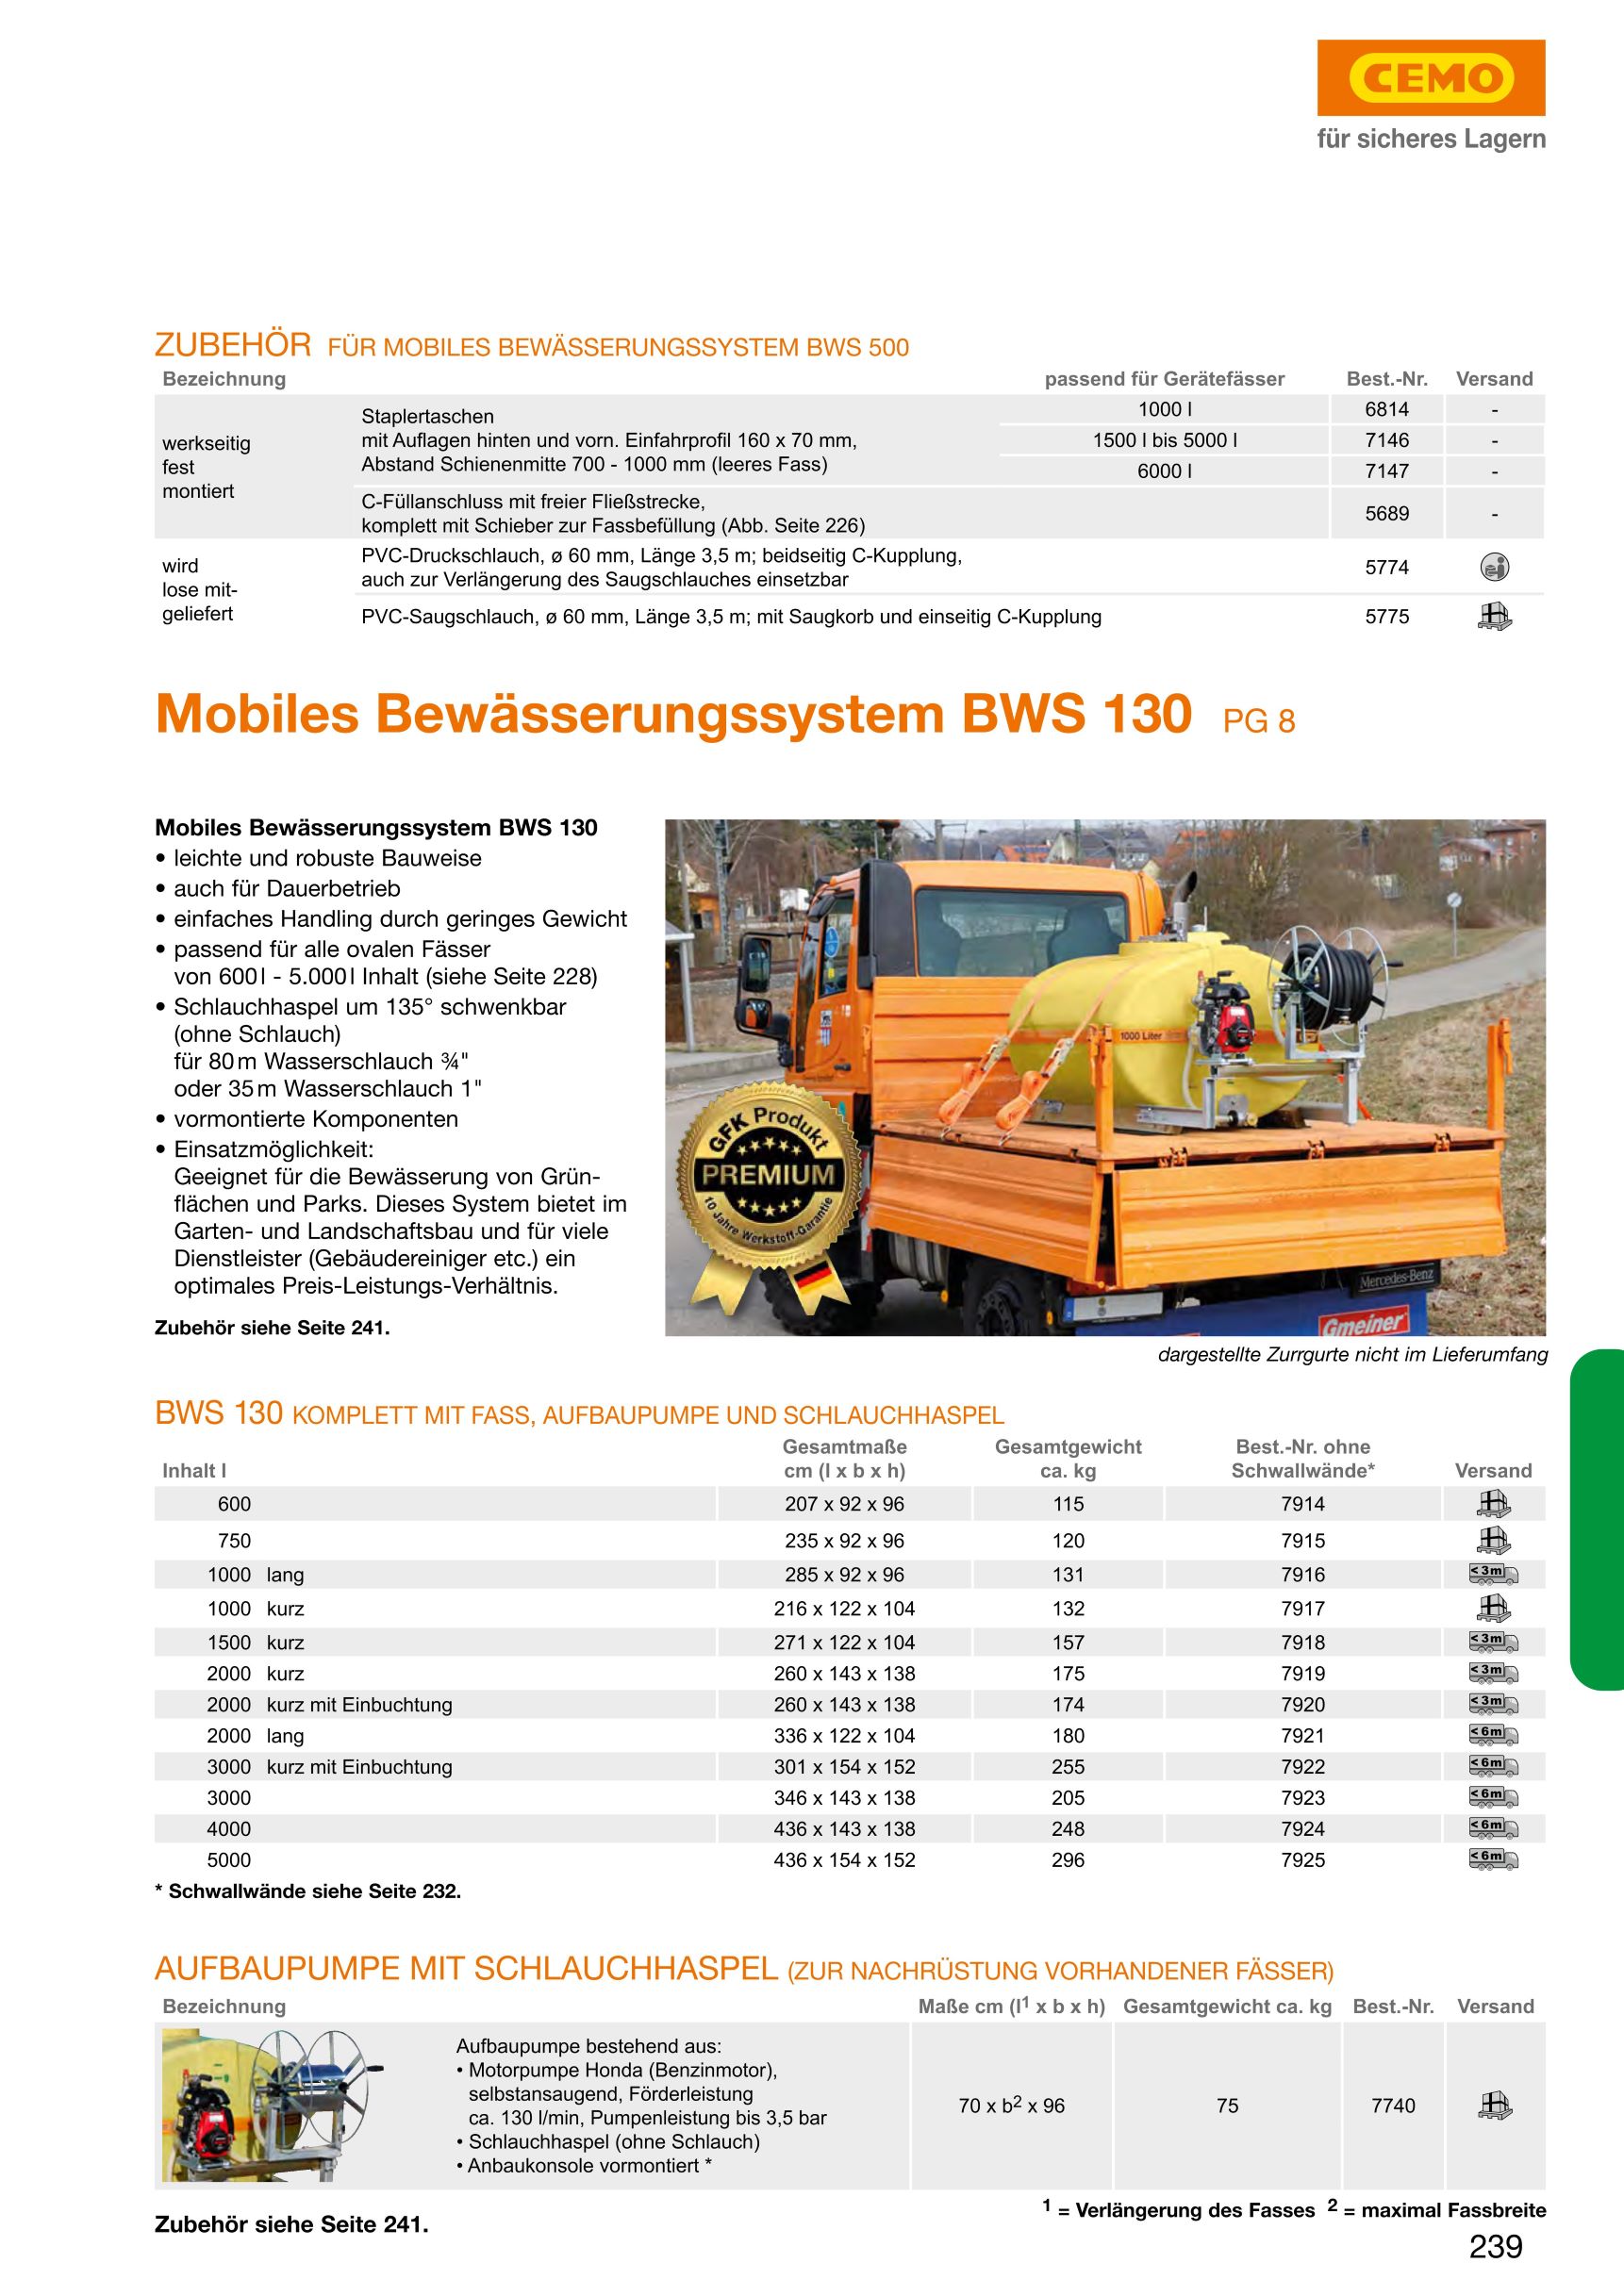 CEMO Mobiles Bewässerungssystem BWS 130, 1000 l kurz, Motorpumpe - 7917